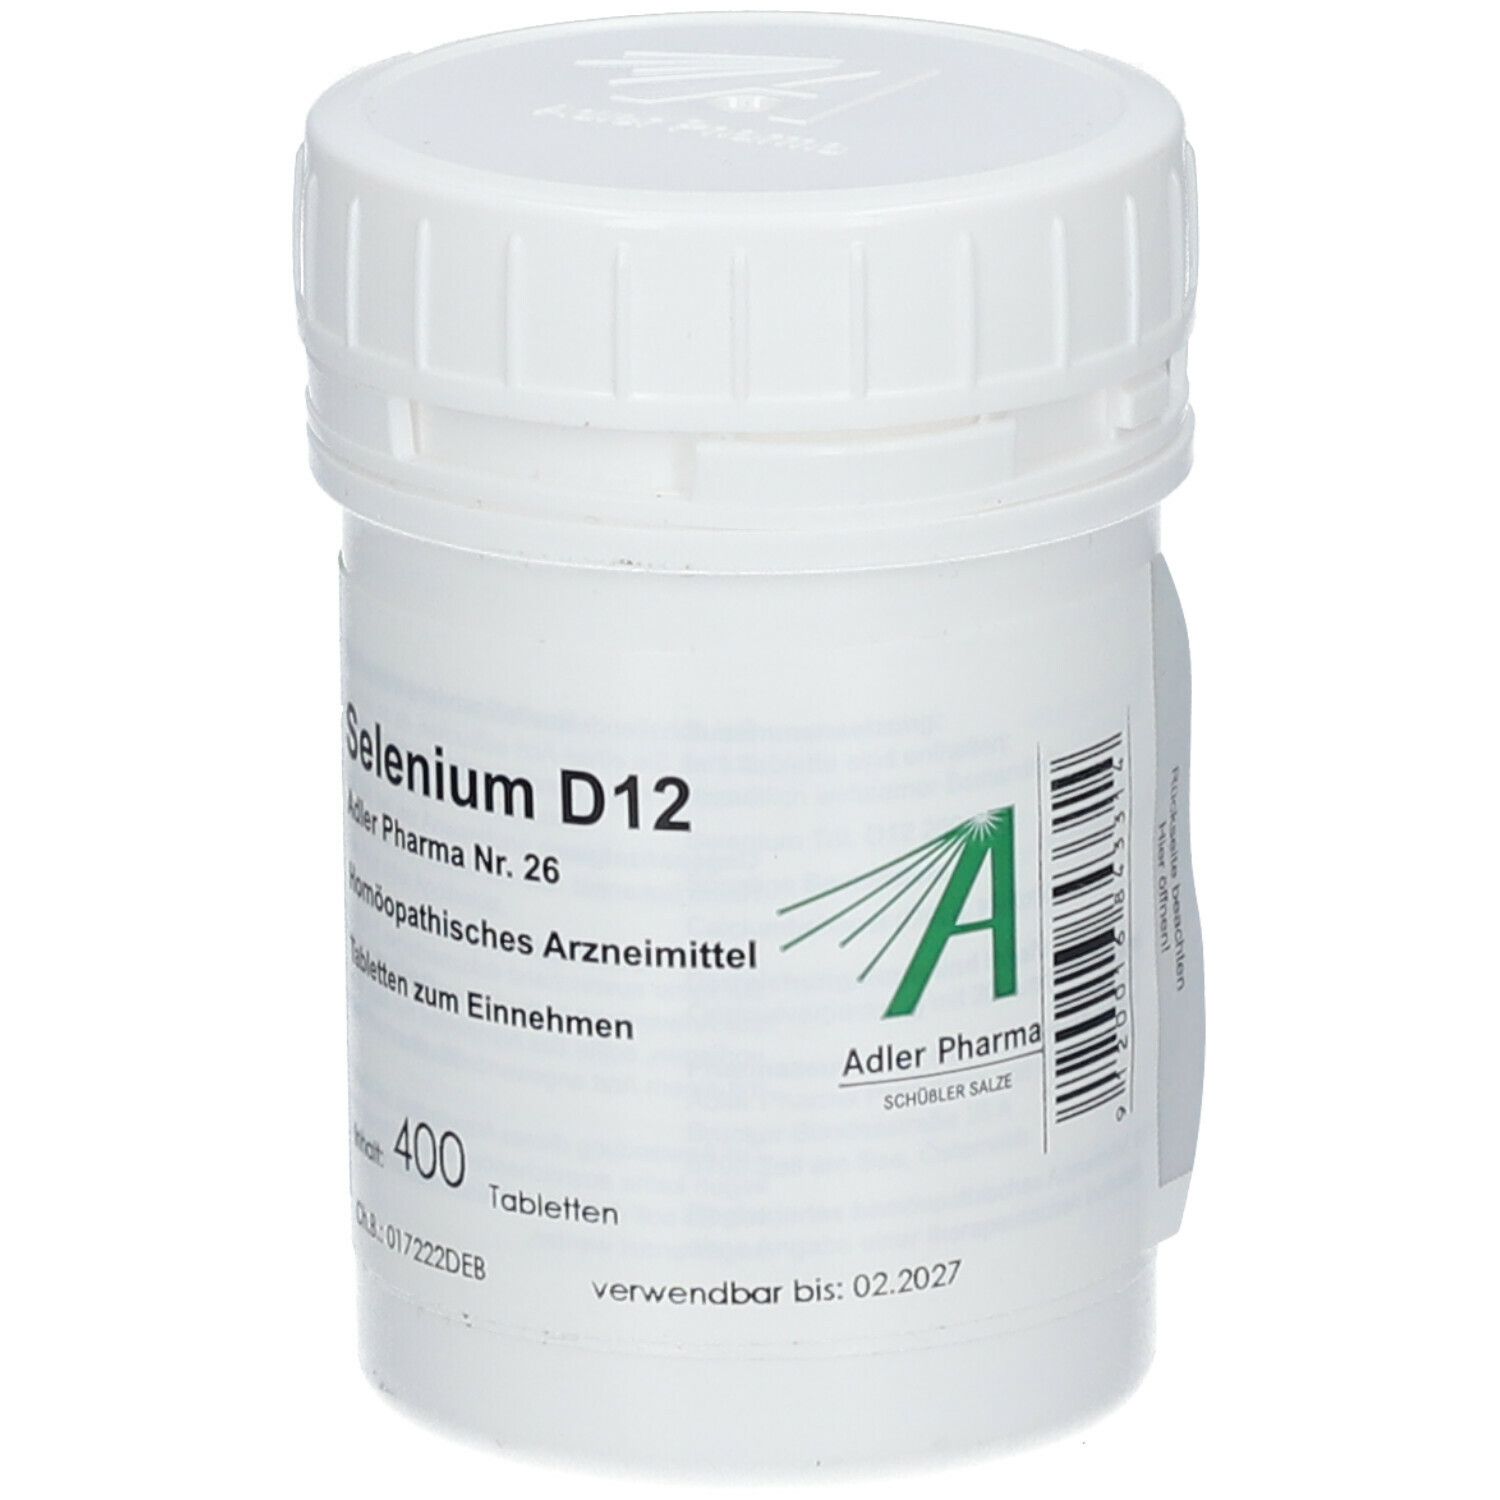 Adler Pharma Selenium D12 Biochemie nach Dr. Schüßler Nr. 26